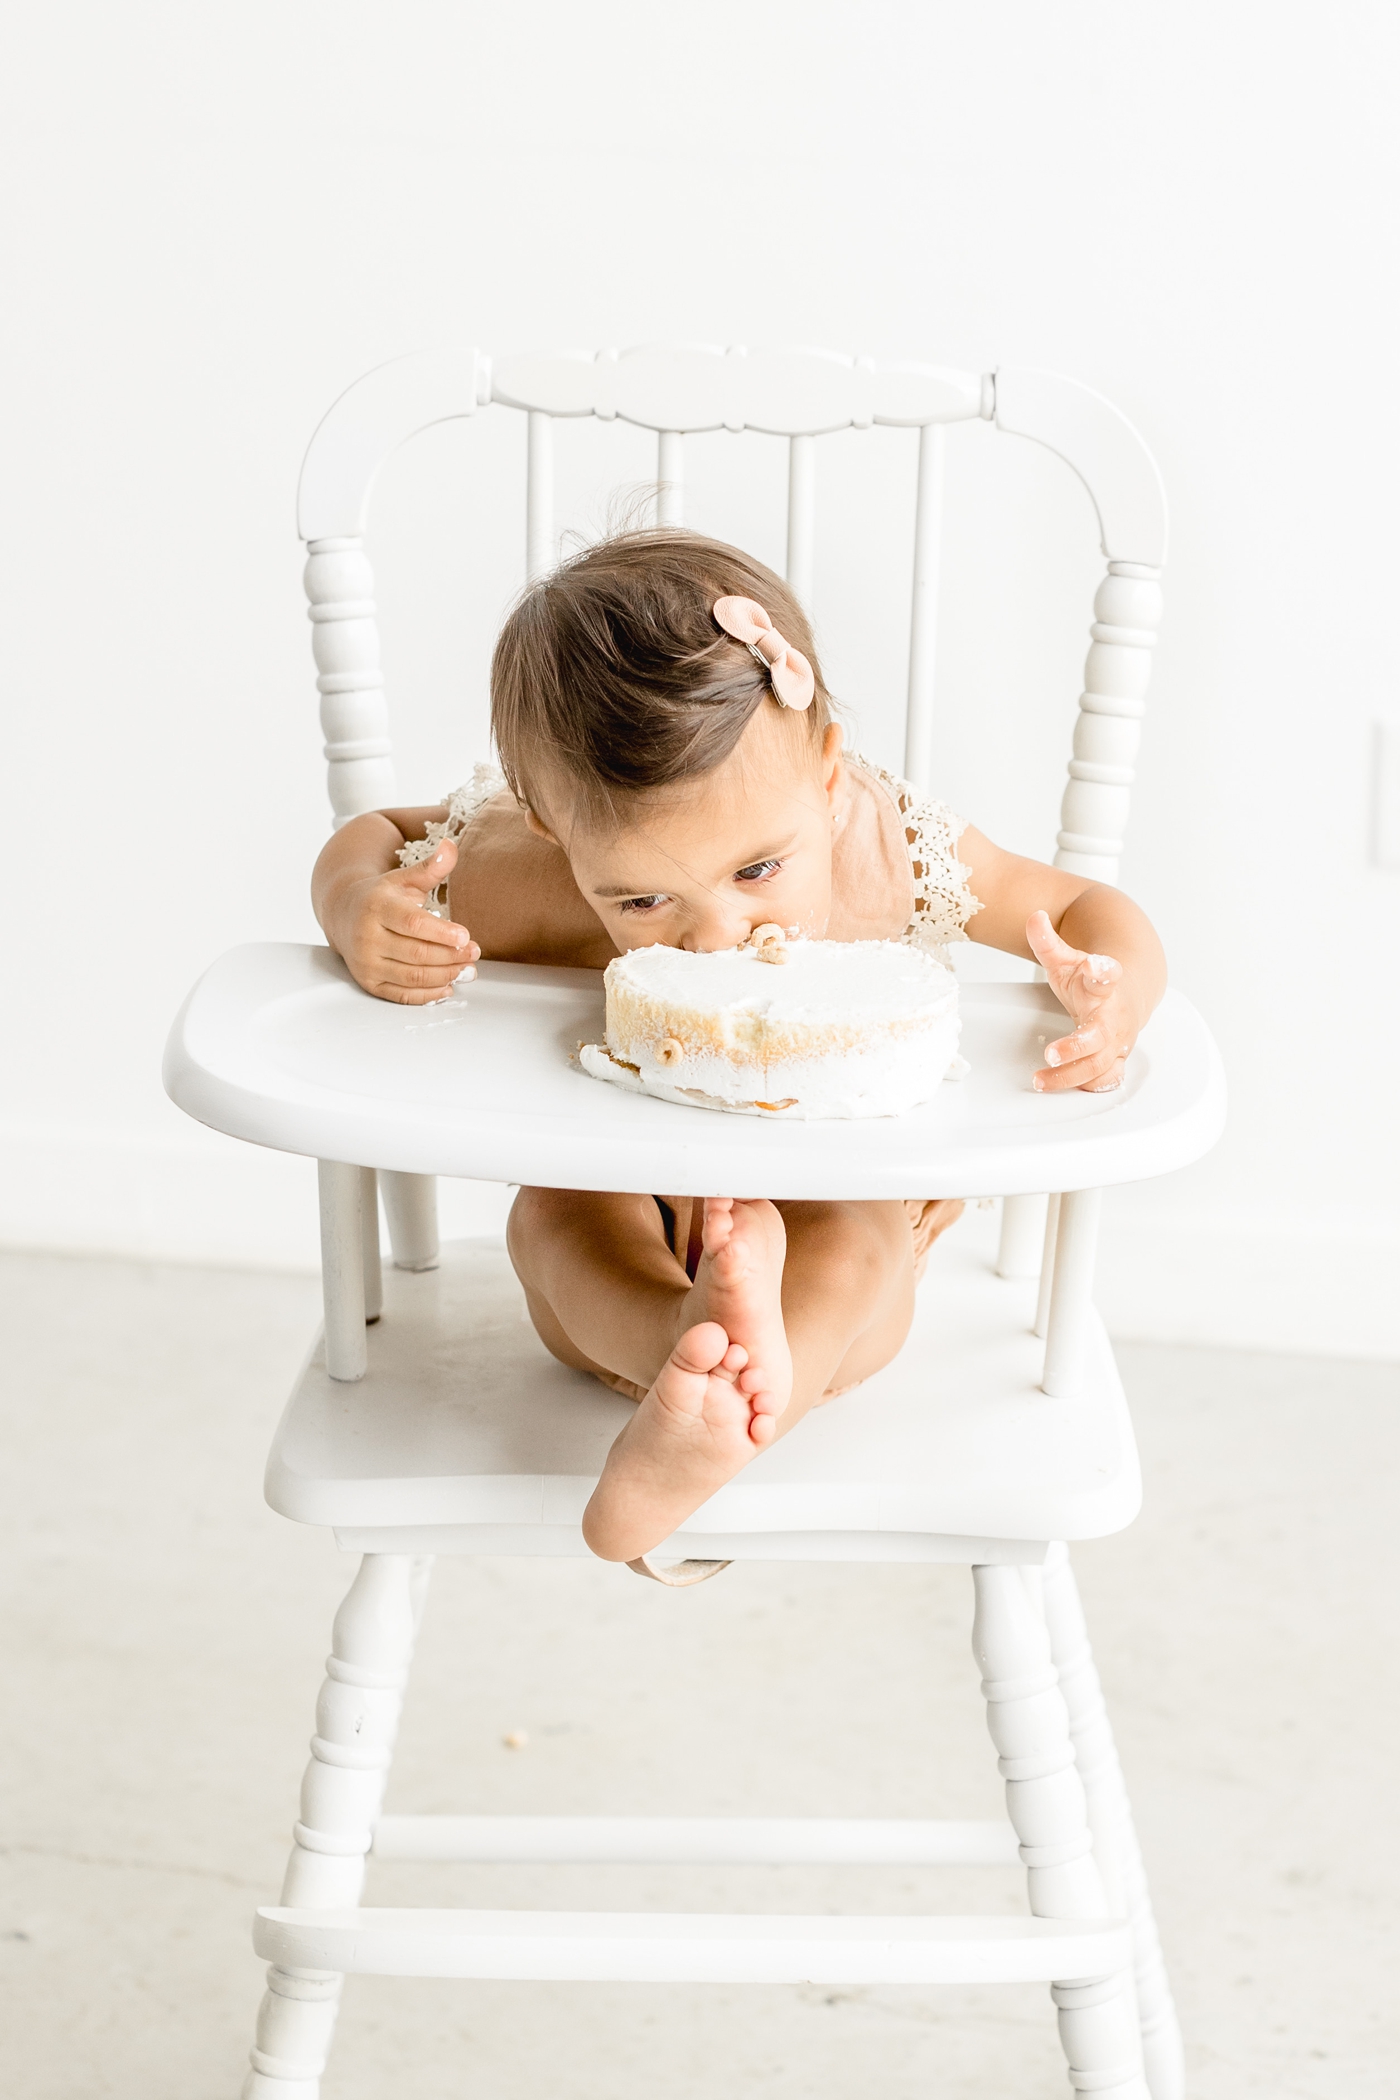 Birthday girl digging into smash cake. Photo by Sana Ahmed Photography.